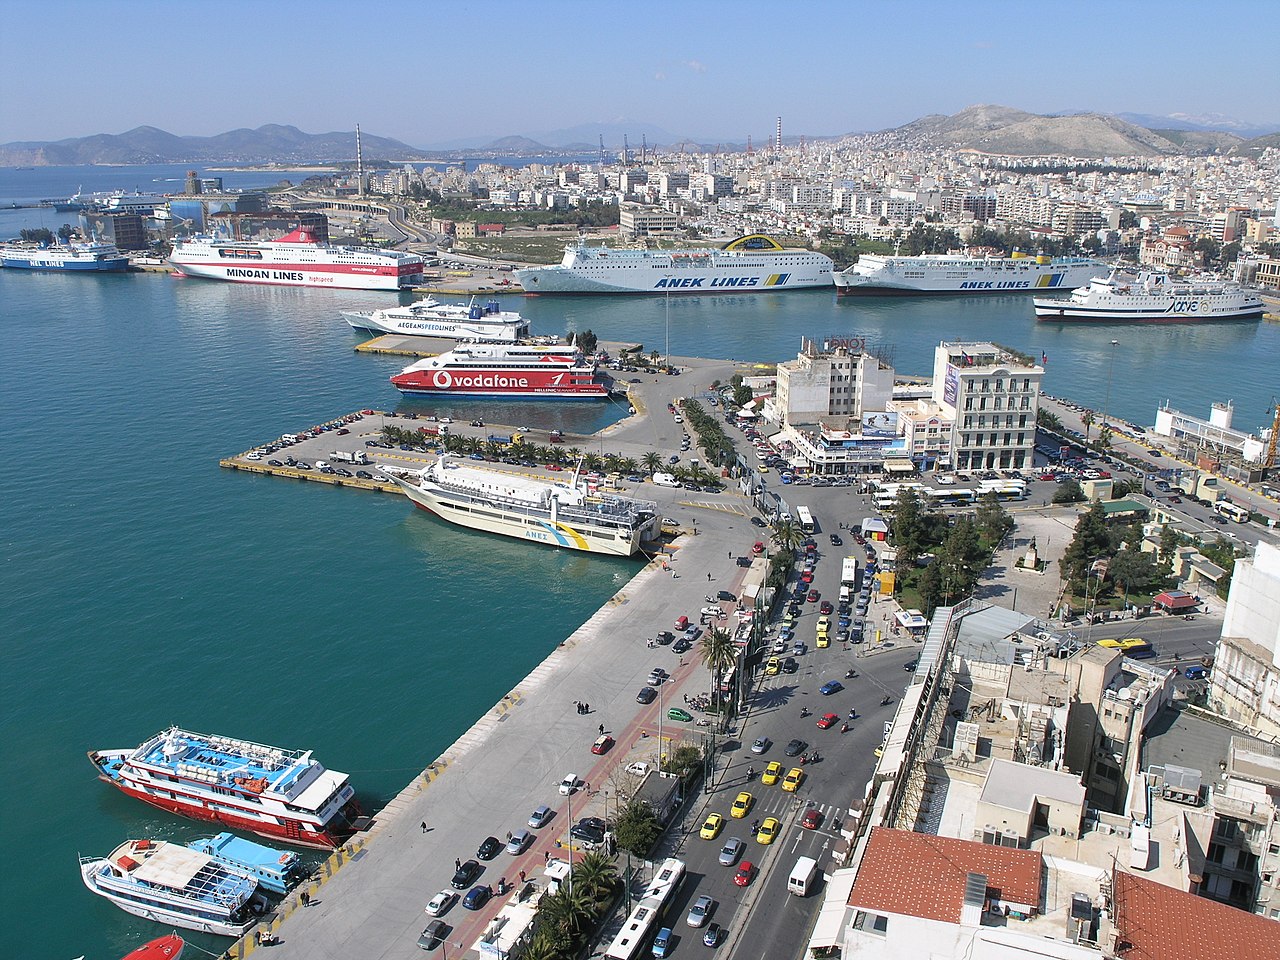 Port of Piraeus / obor financing model